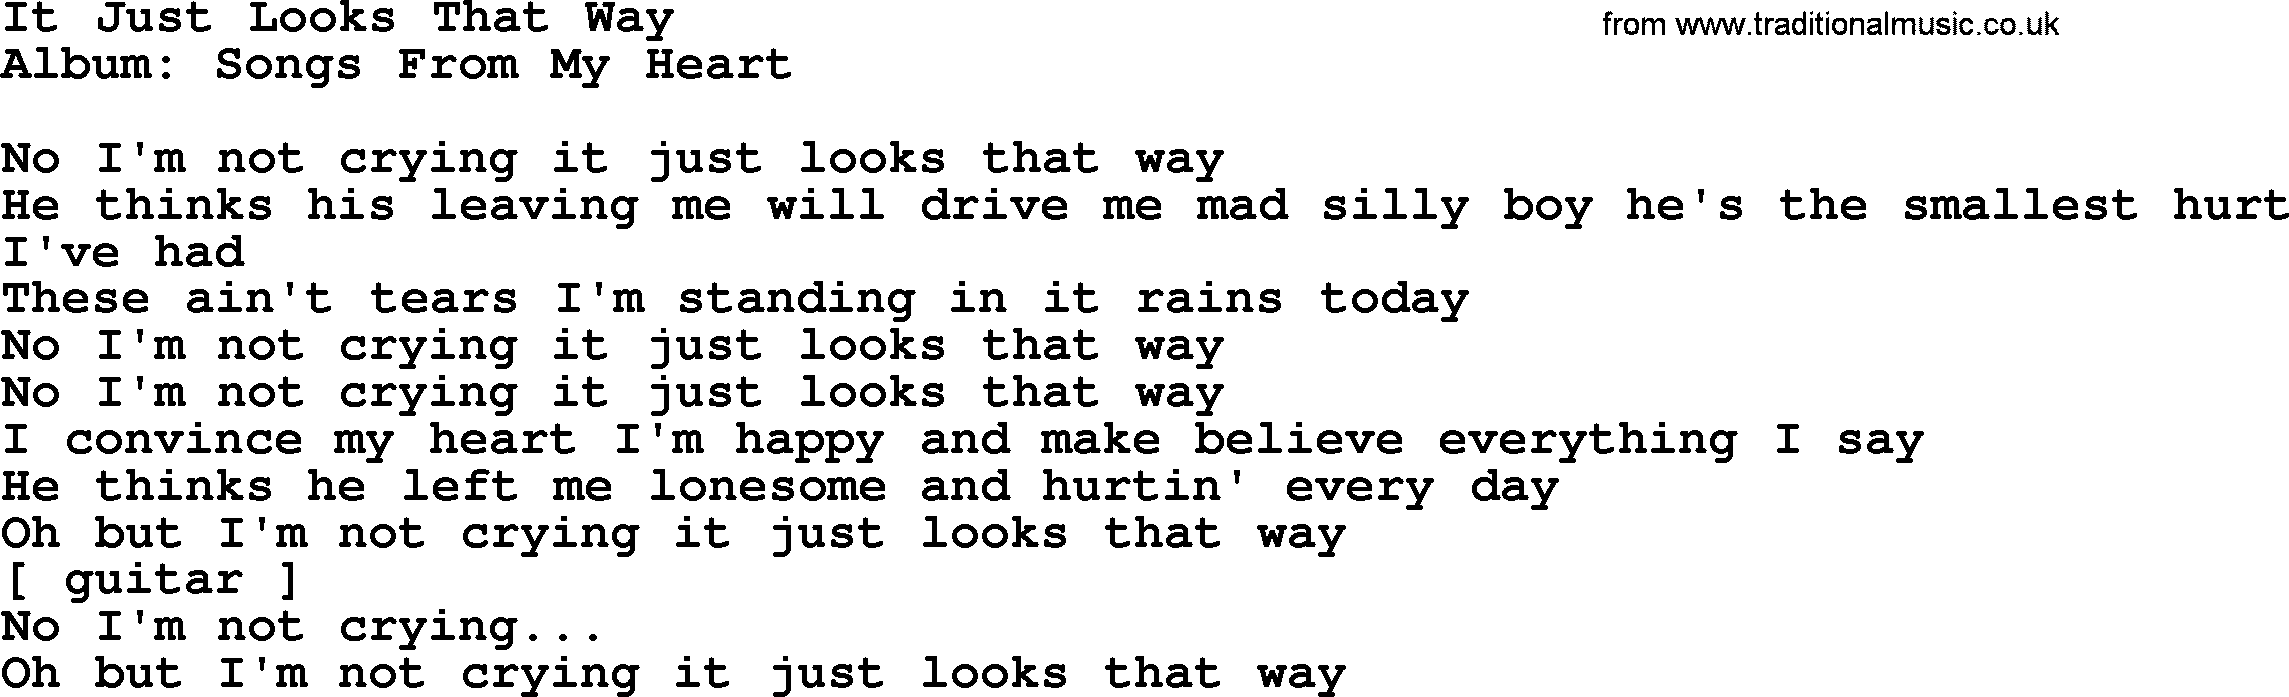 Loretta Lynn song: It Just Looks That Way lyrics